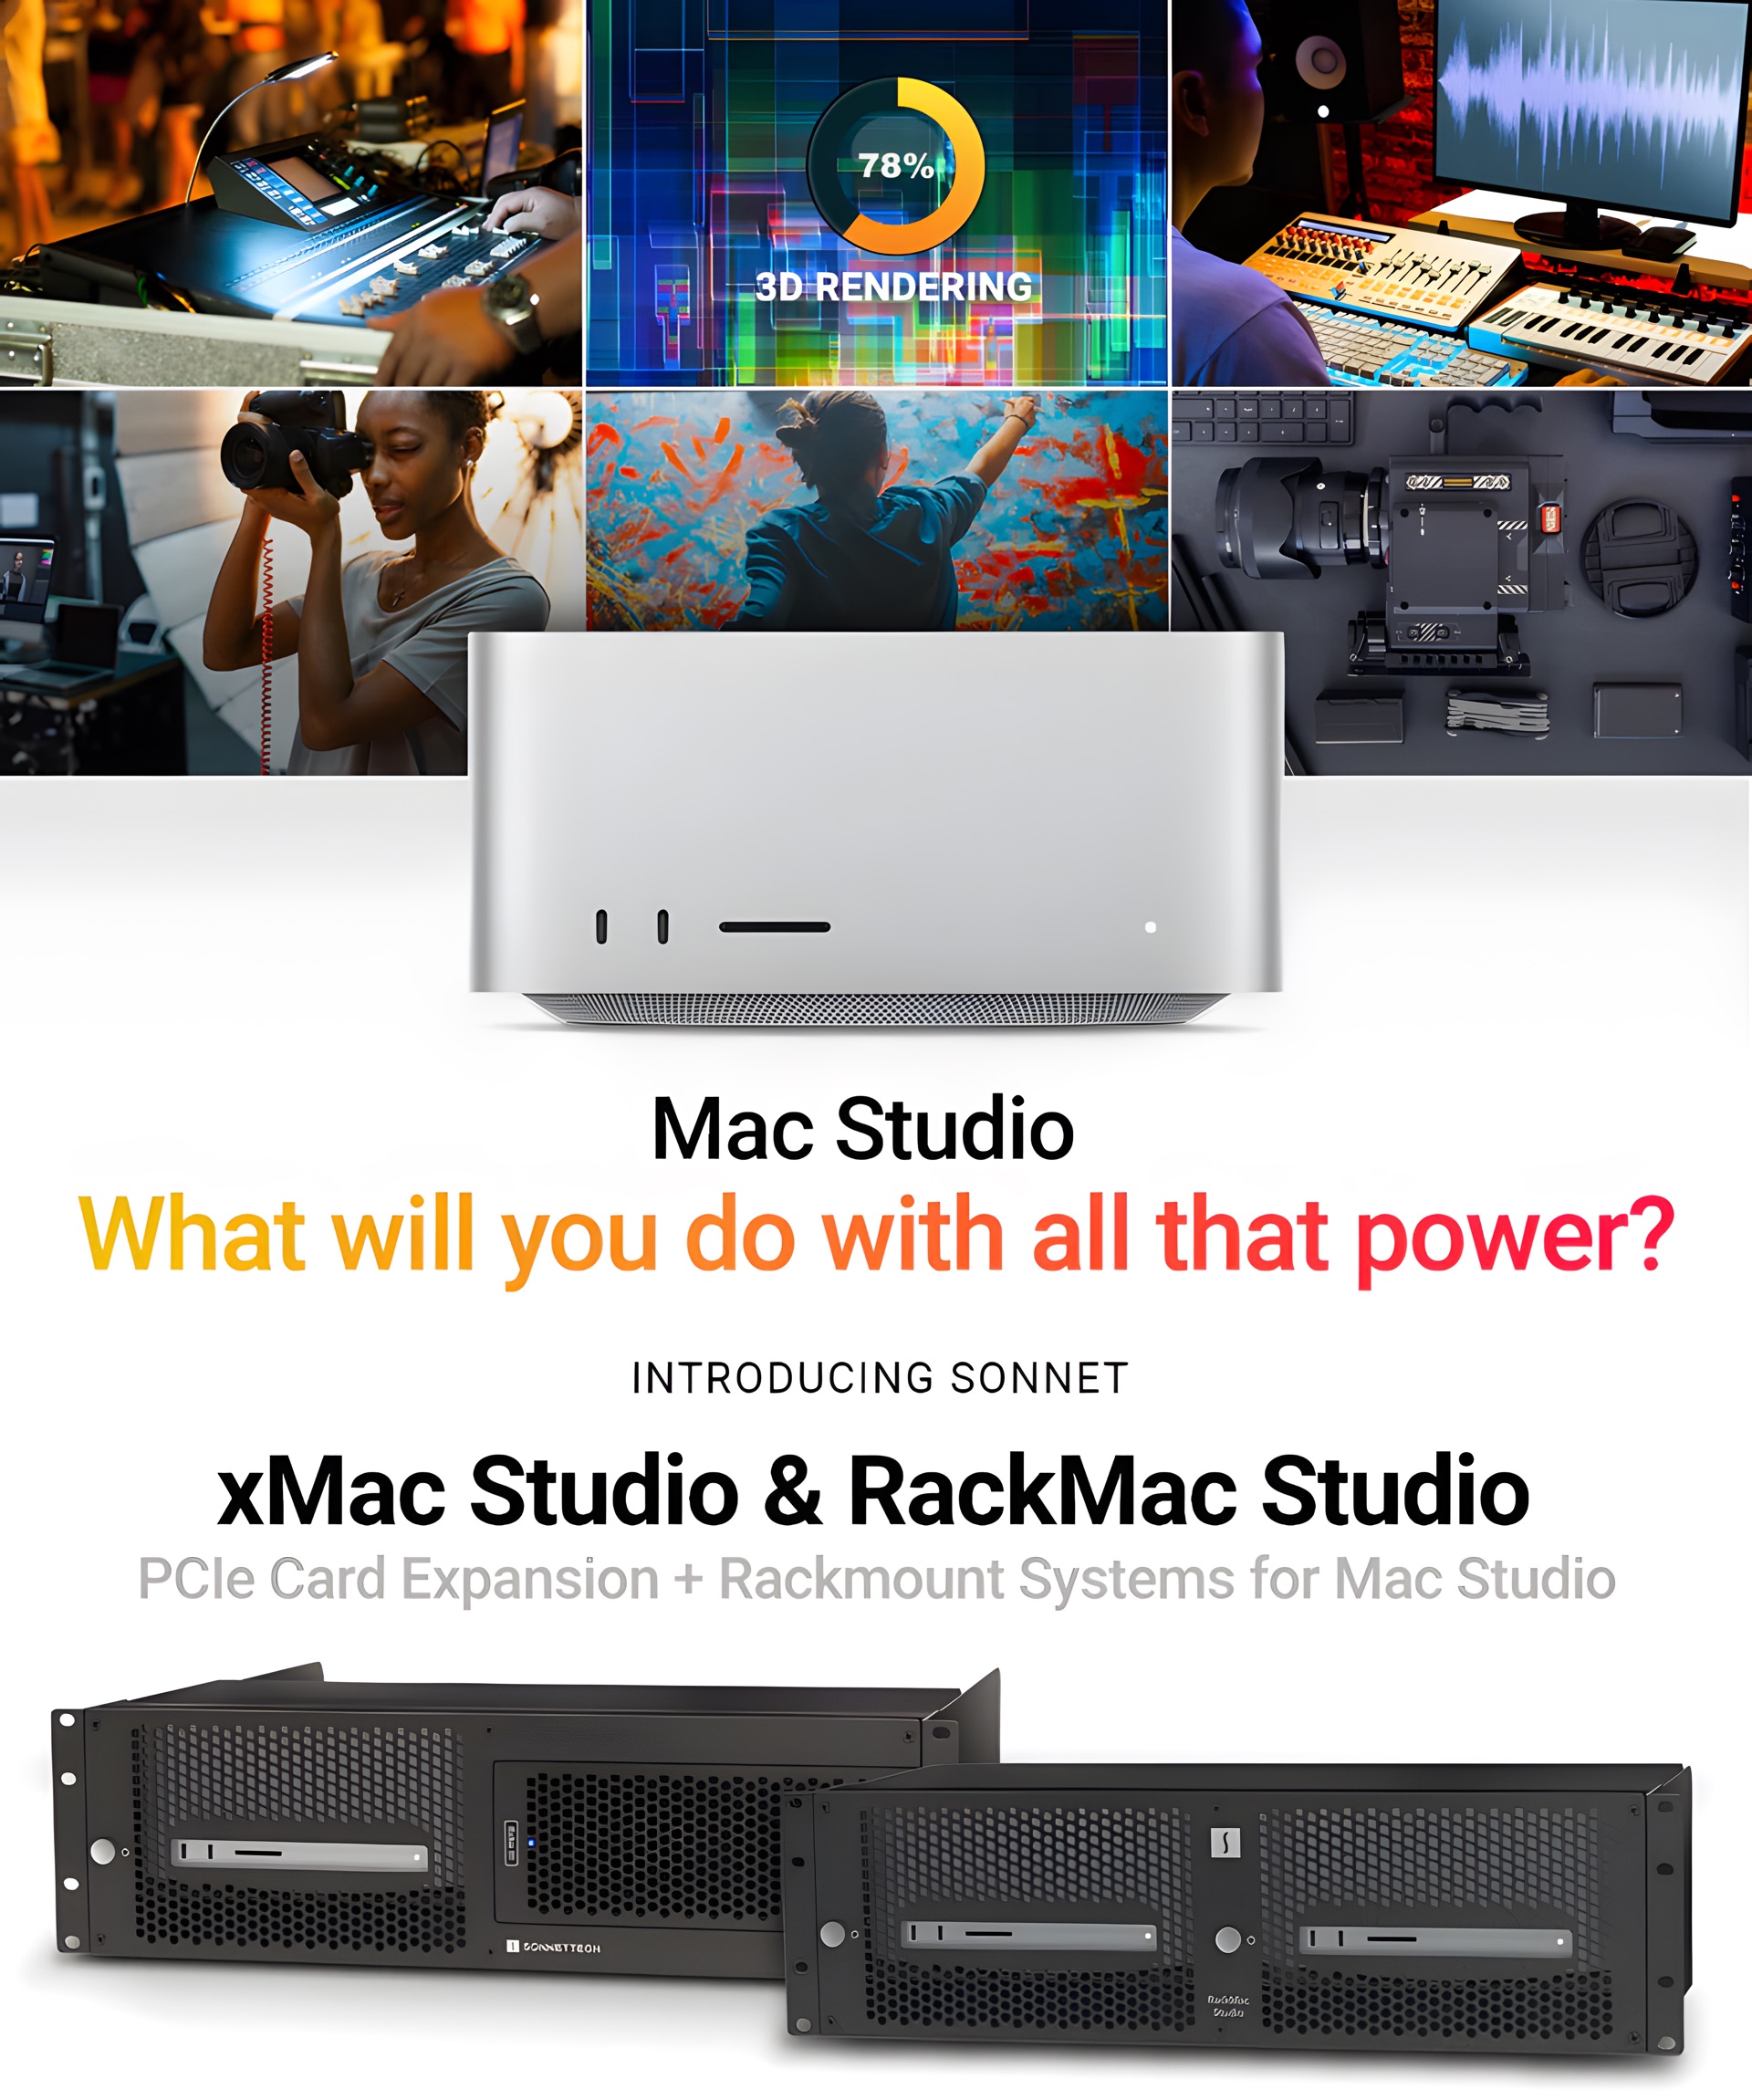 Sonnet xMac Studio and RackMac Studio introducing